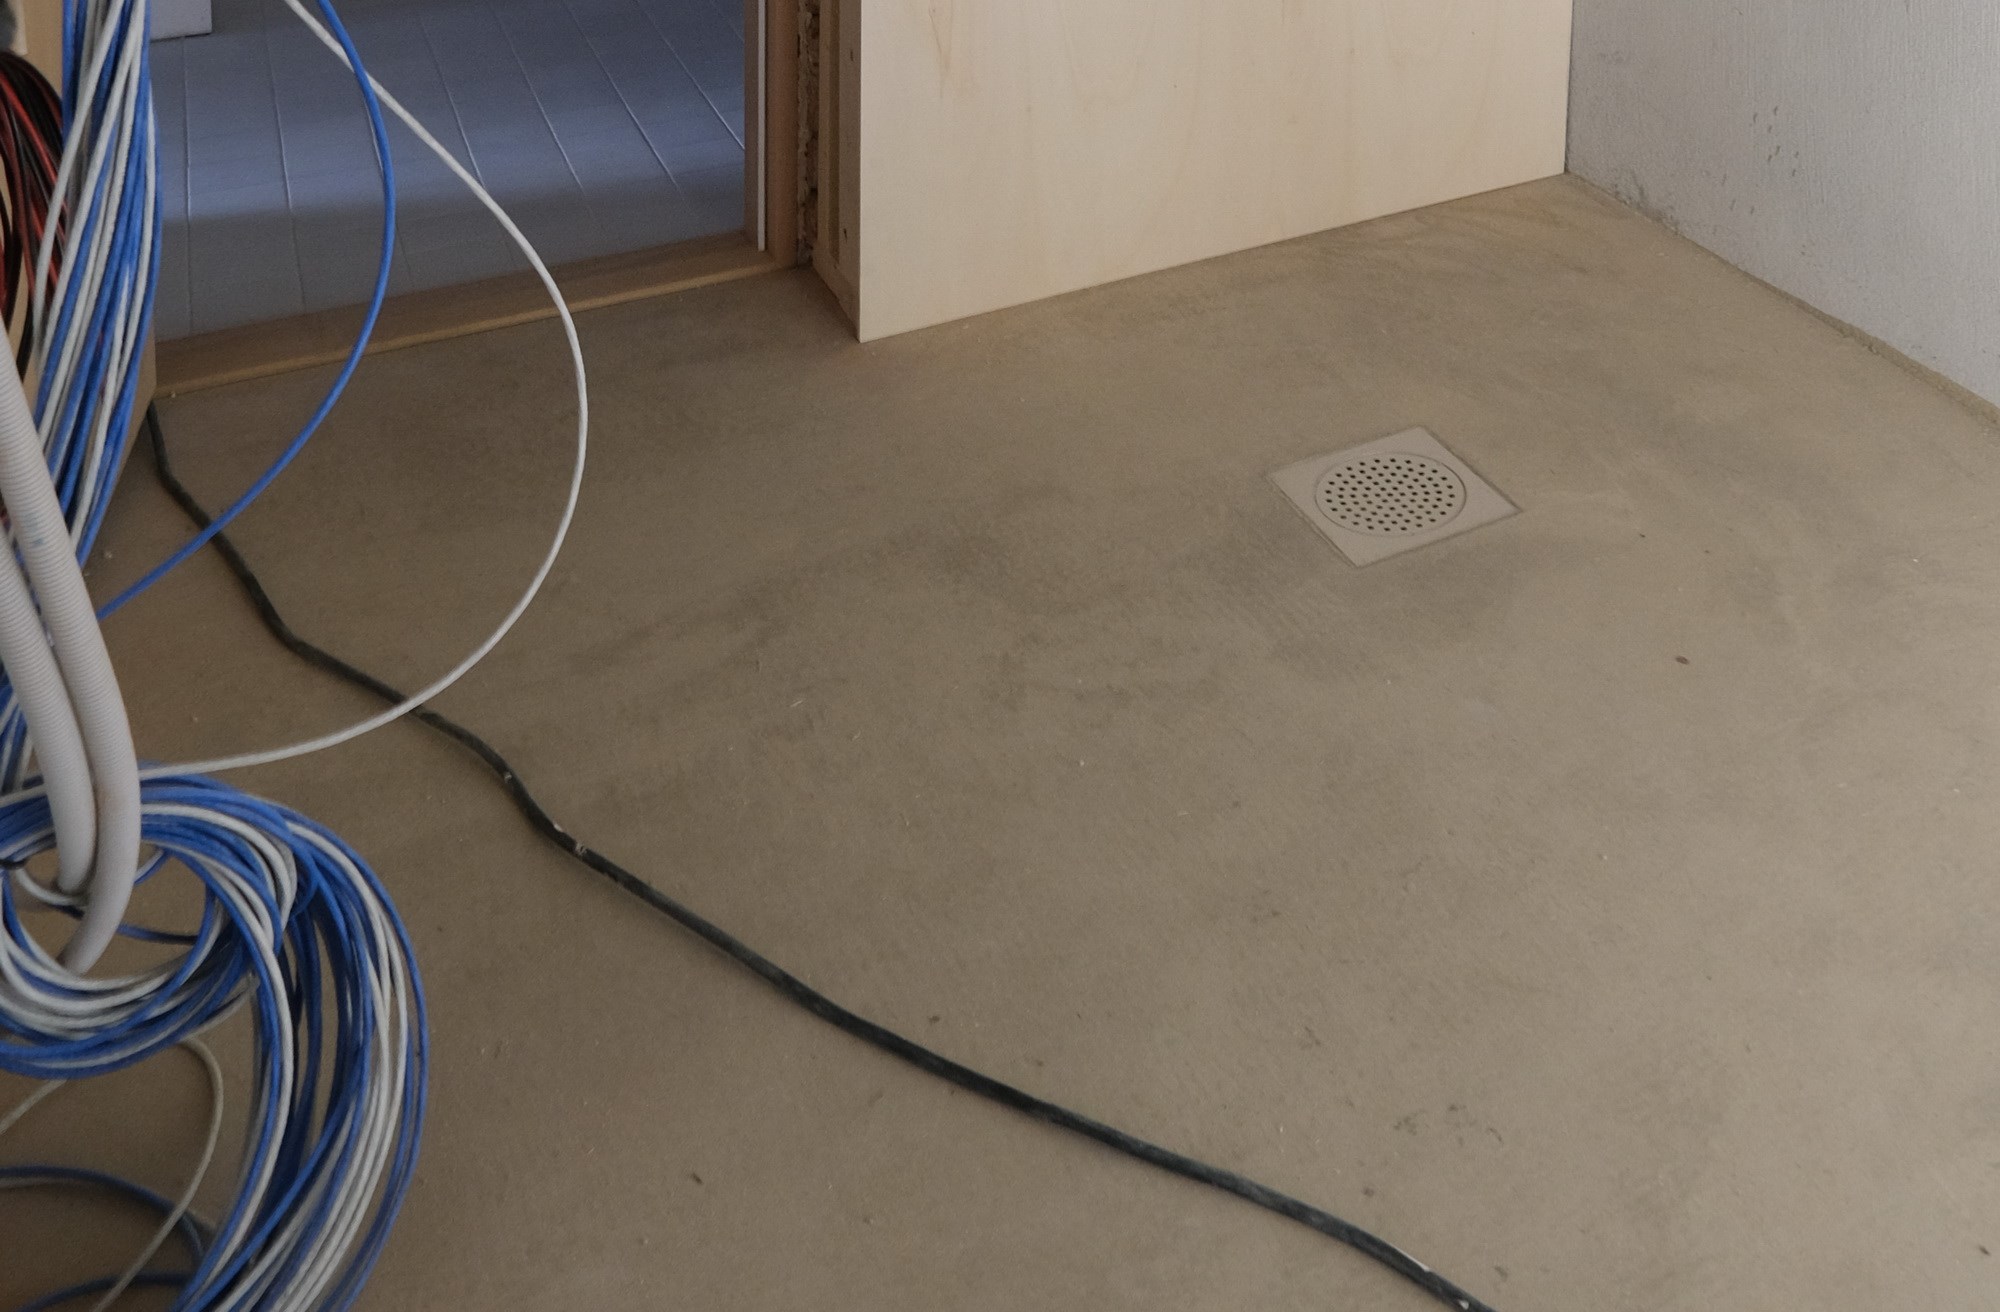 Male gulv på teknisk rom (renovering 60-tallshus) - diffusjonsåpent? - 2_nytt_gulv.JPG - axel